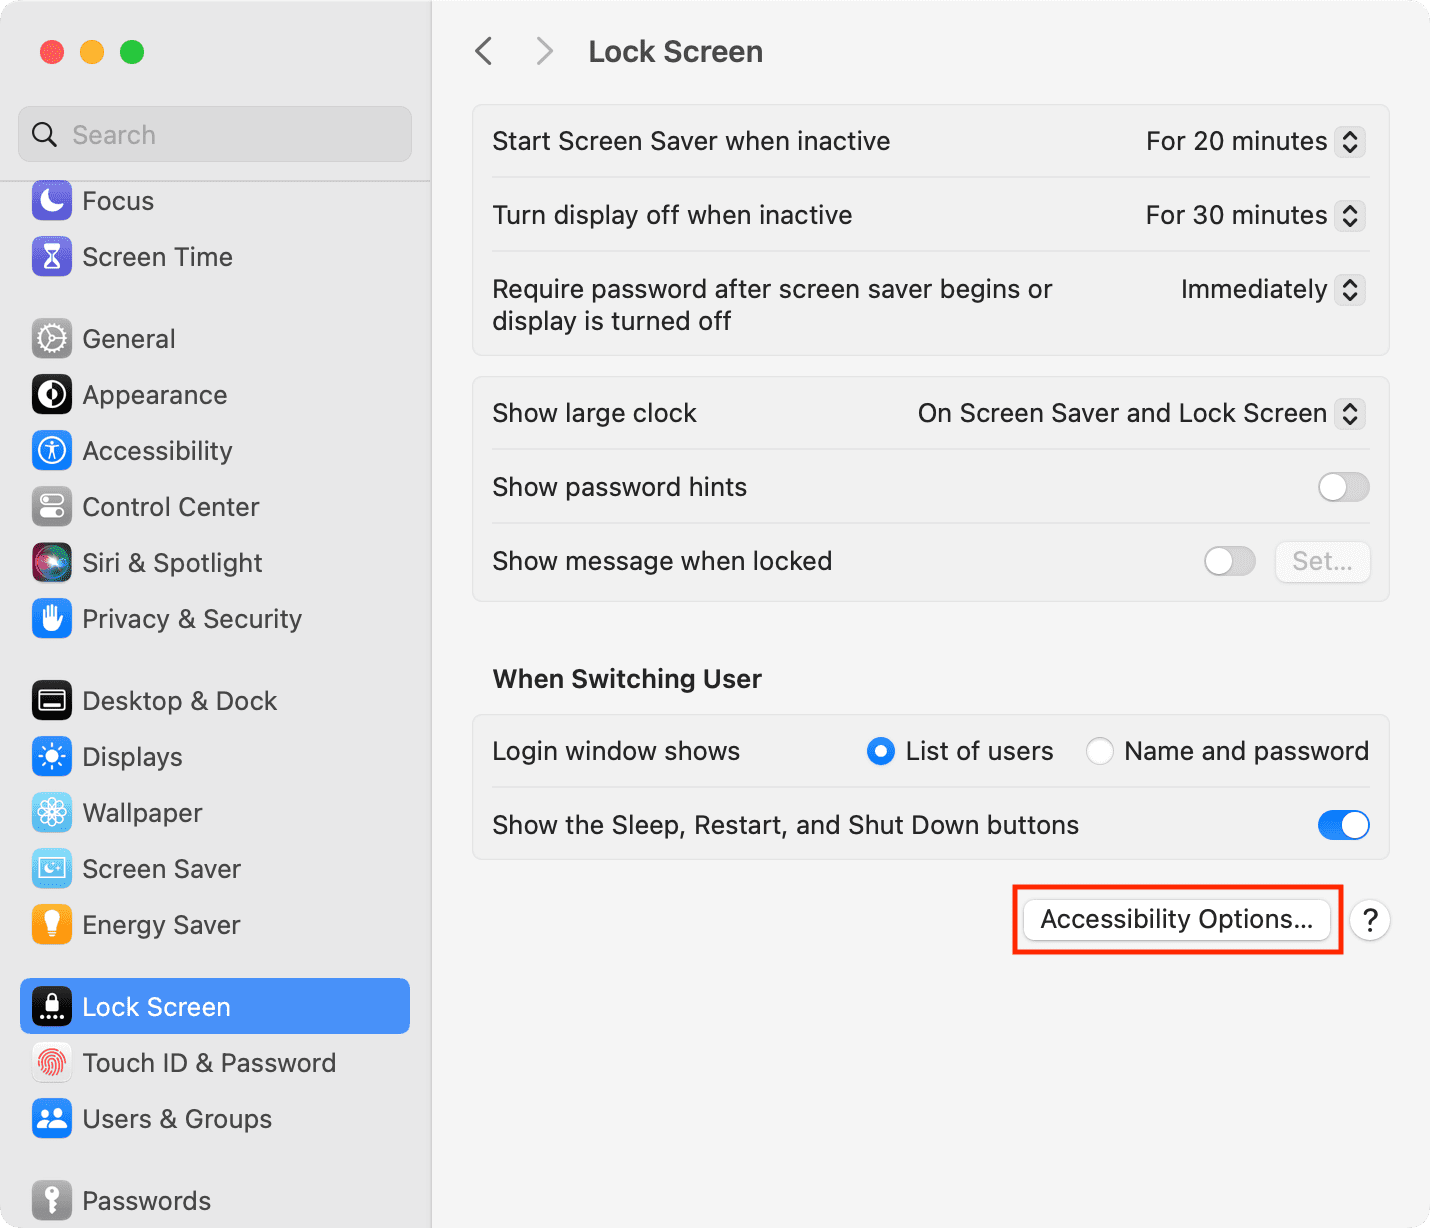 Accessibility Options in Mac Lock Screen settings